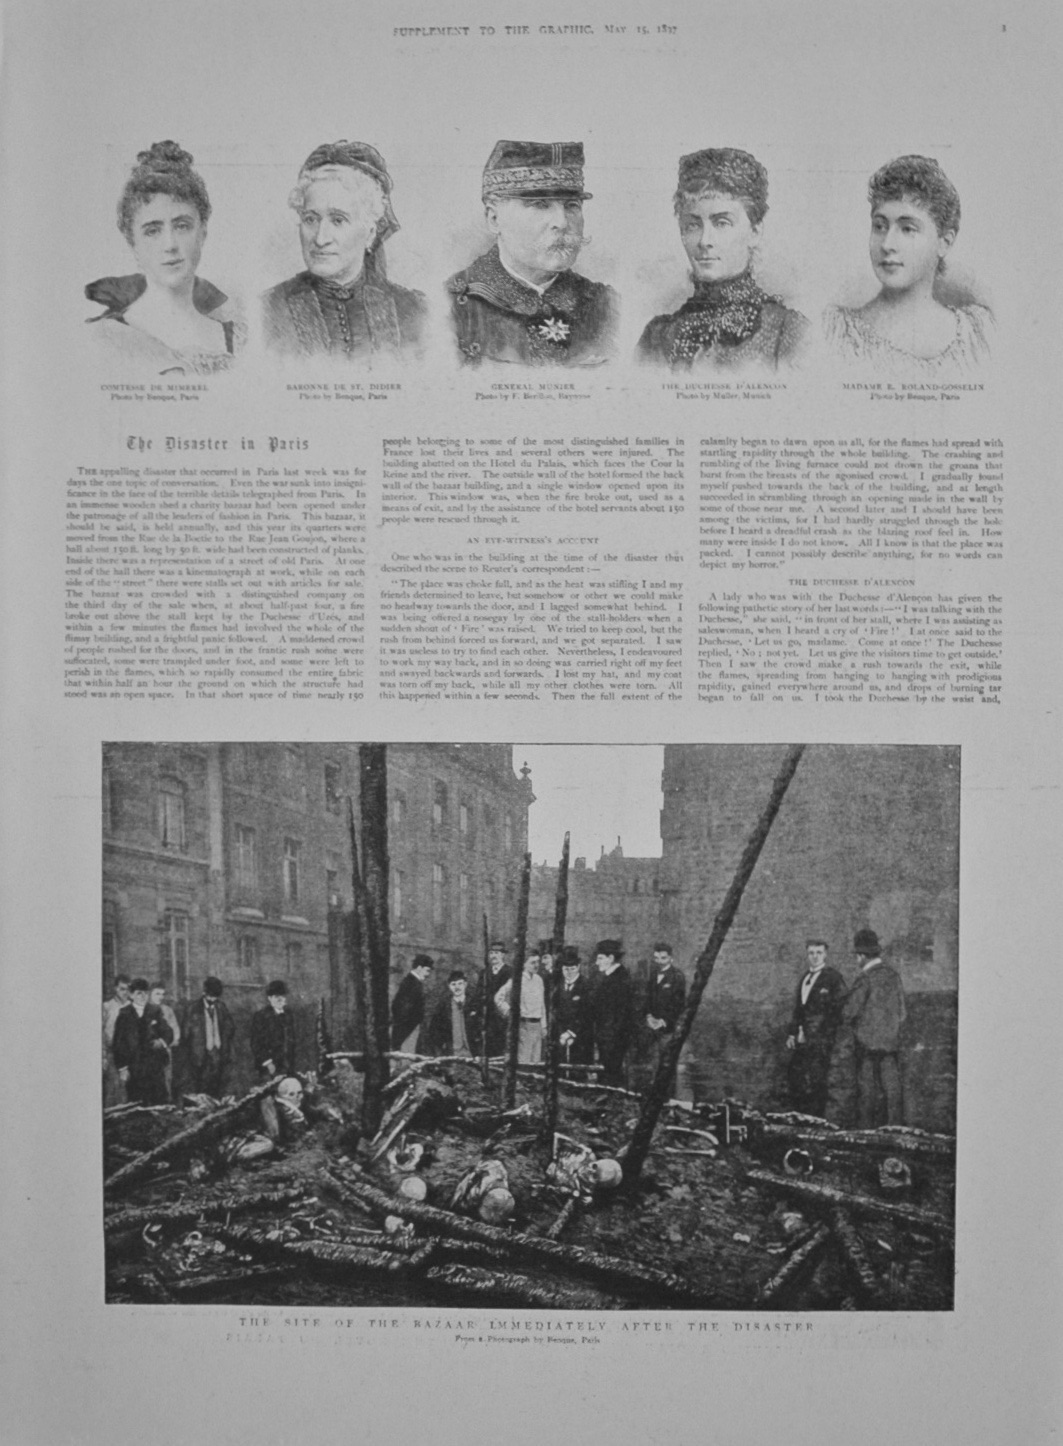 The Disaster in Paris - 1897